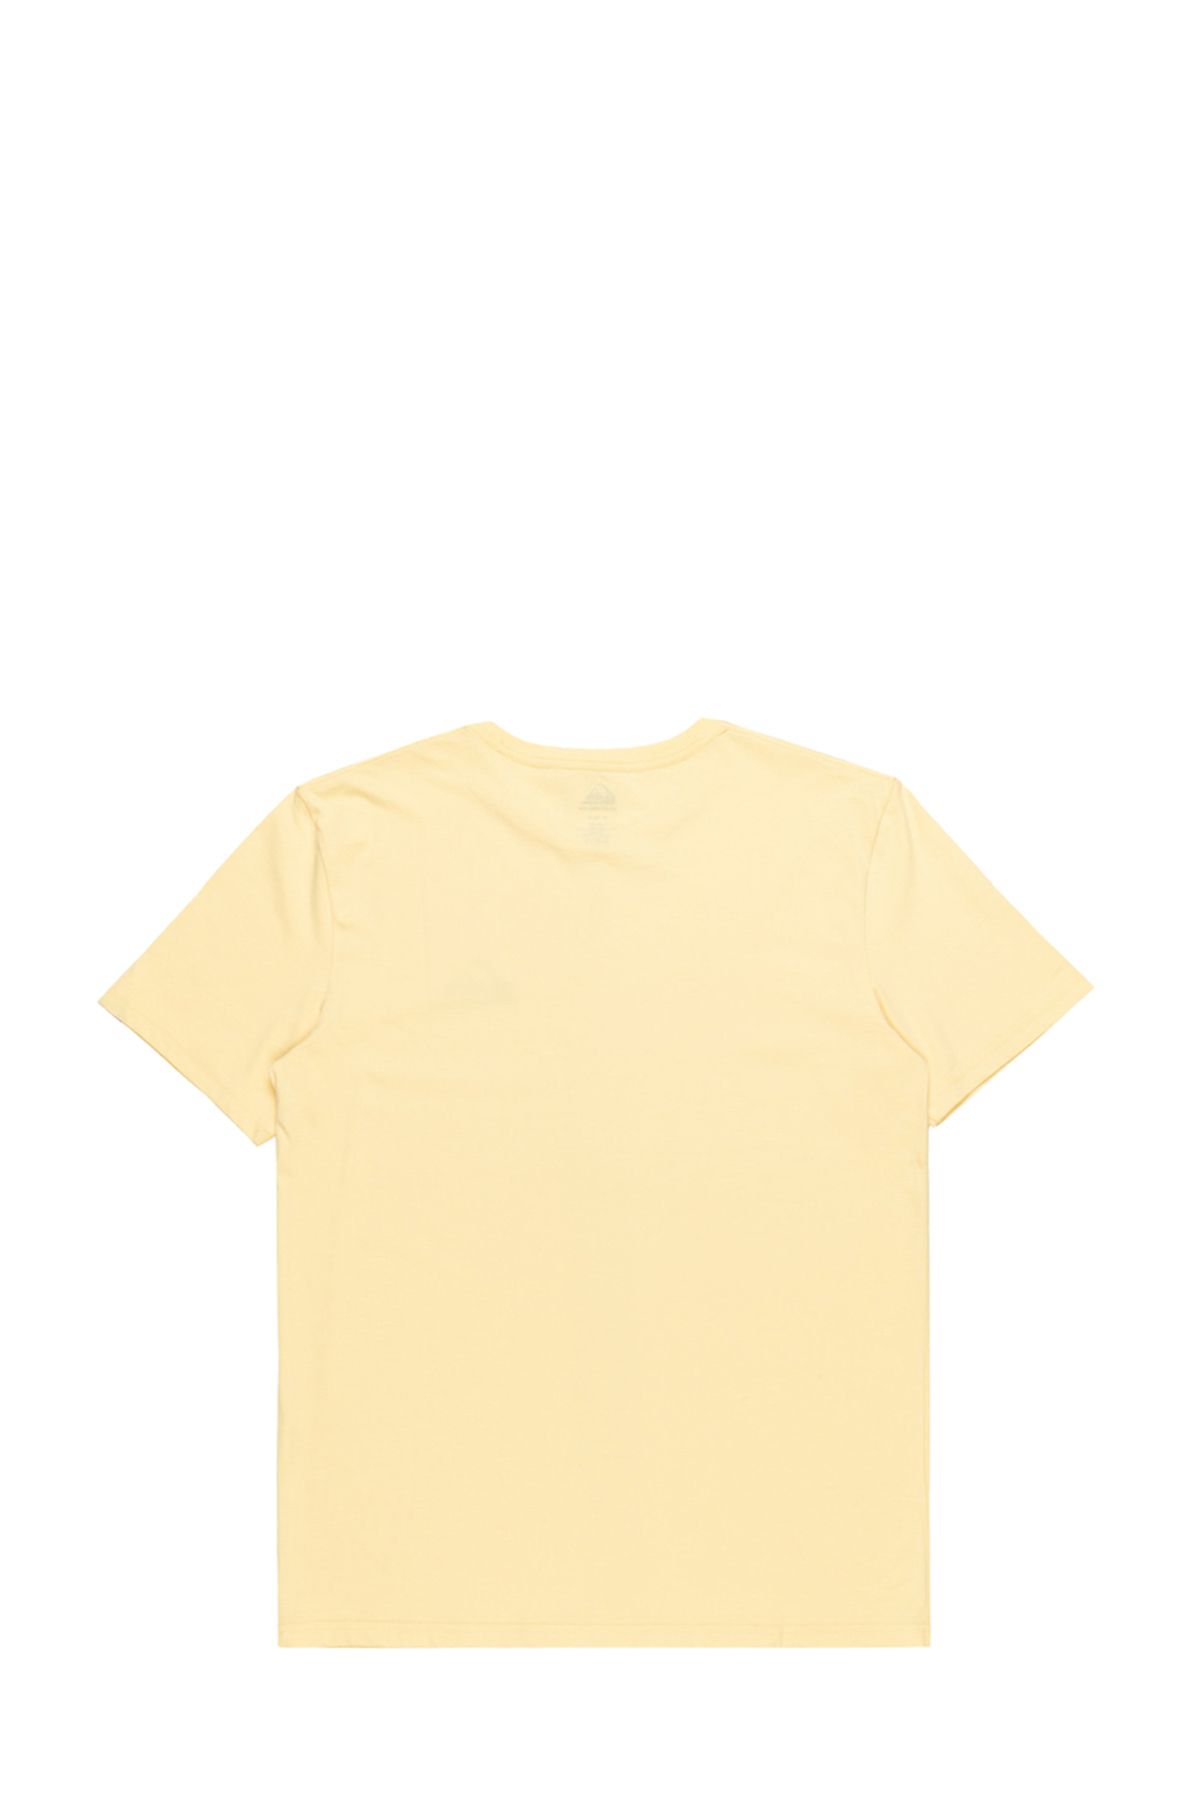 Quiksilver MWMINILOGO TEES Sarı Erkek Kısa Kol T-Shirt